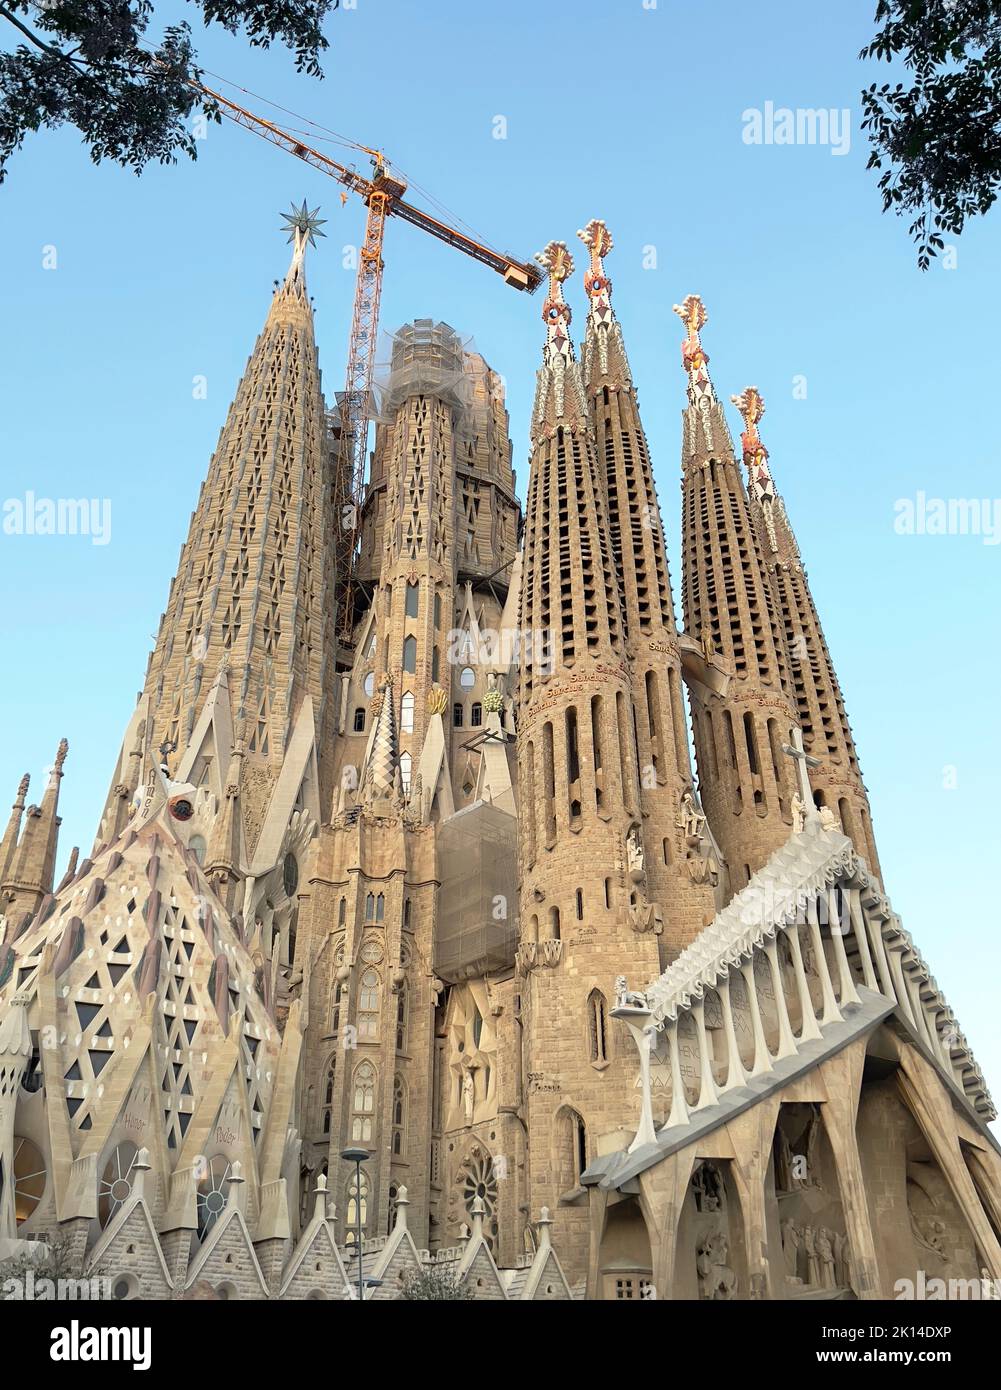 Barcelona, Spain - May 7, 2022. La Sagrada Familia. La Sagrada Familia is a large unfinished minor basilica in the Eixample district of Barcelona. Stock Photo